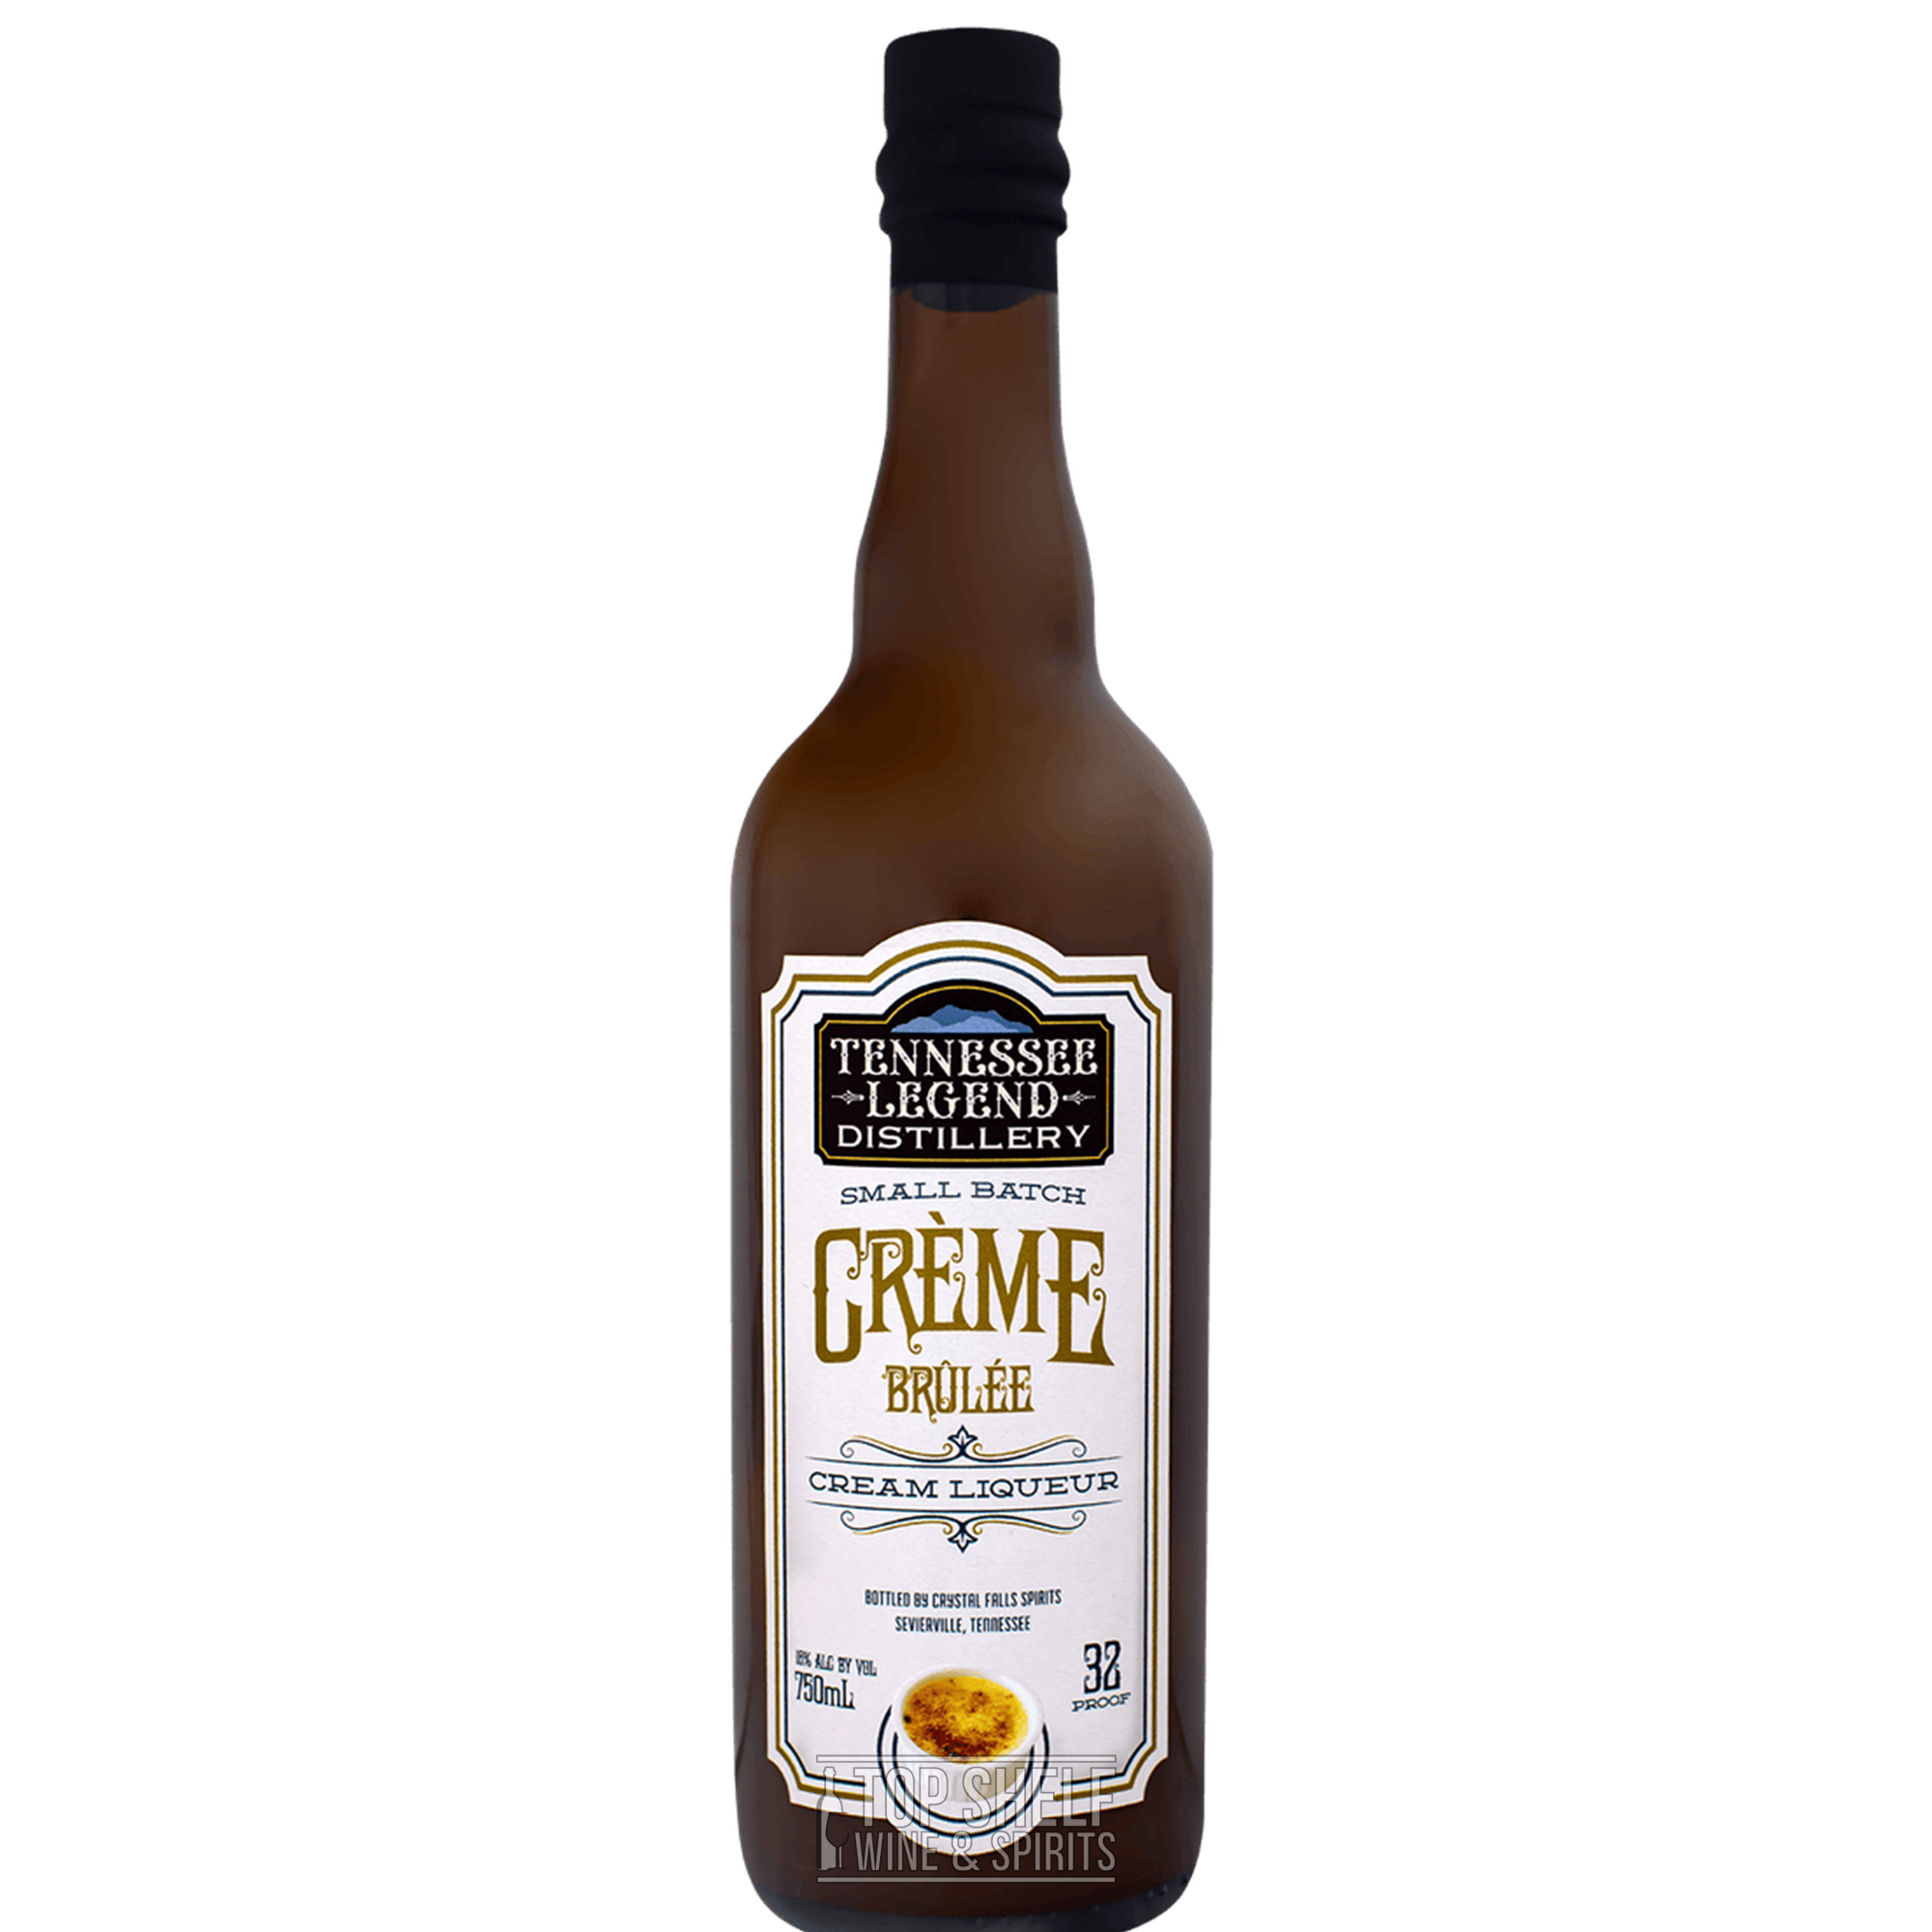 Tennessee Legend Creme Brulee Cream Liqueur